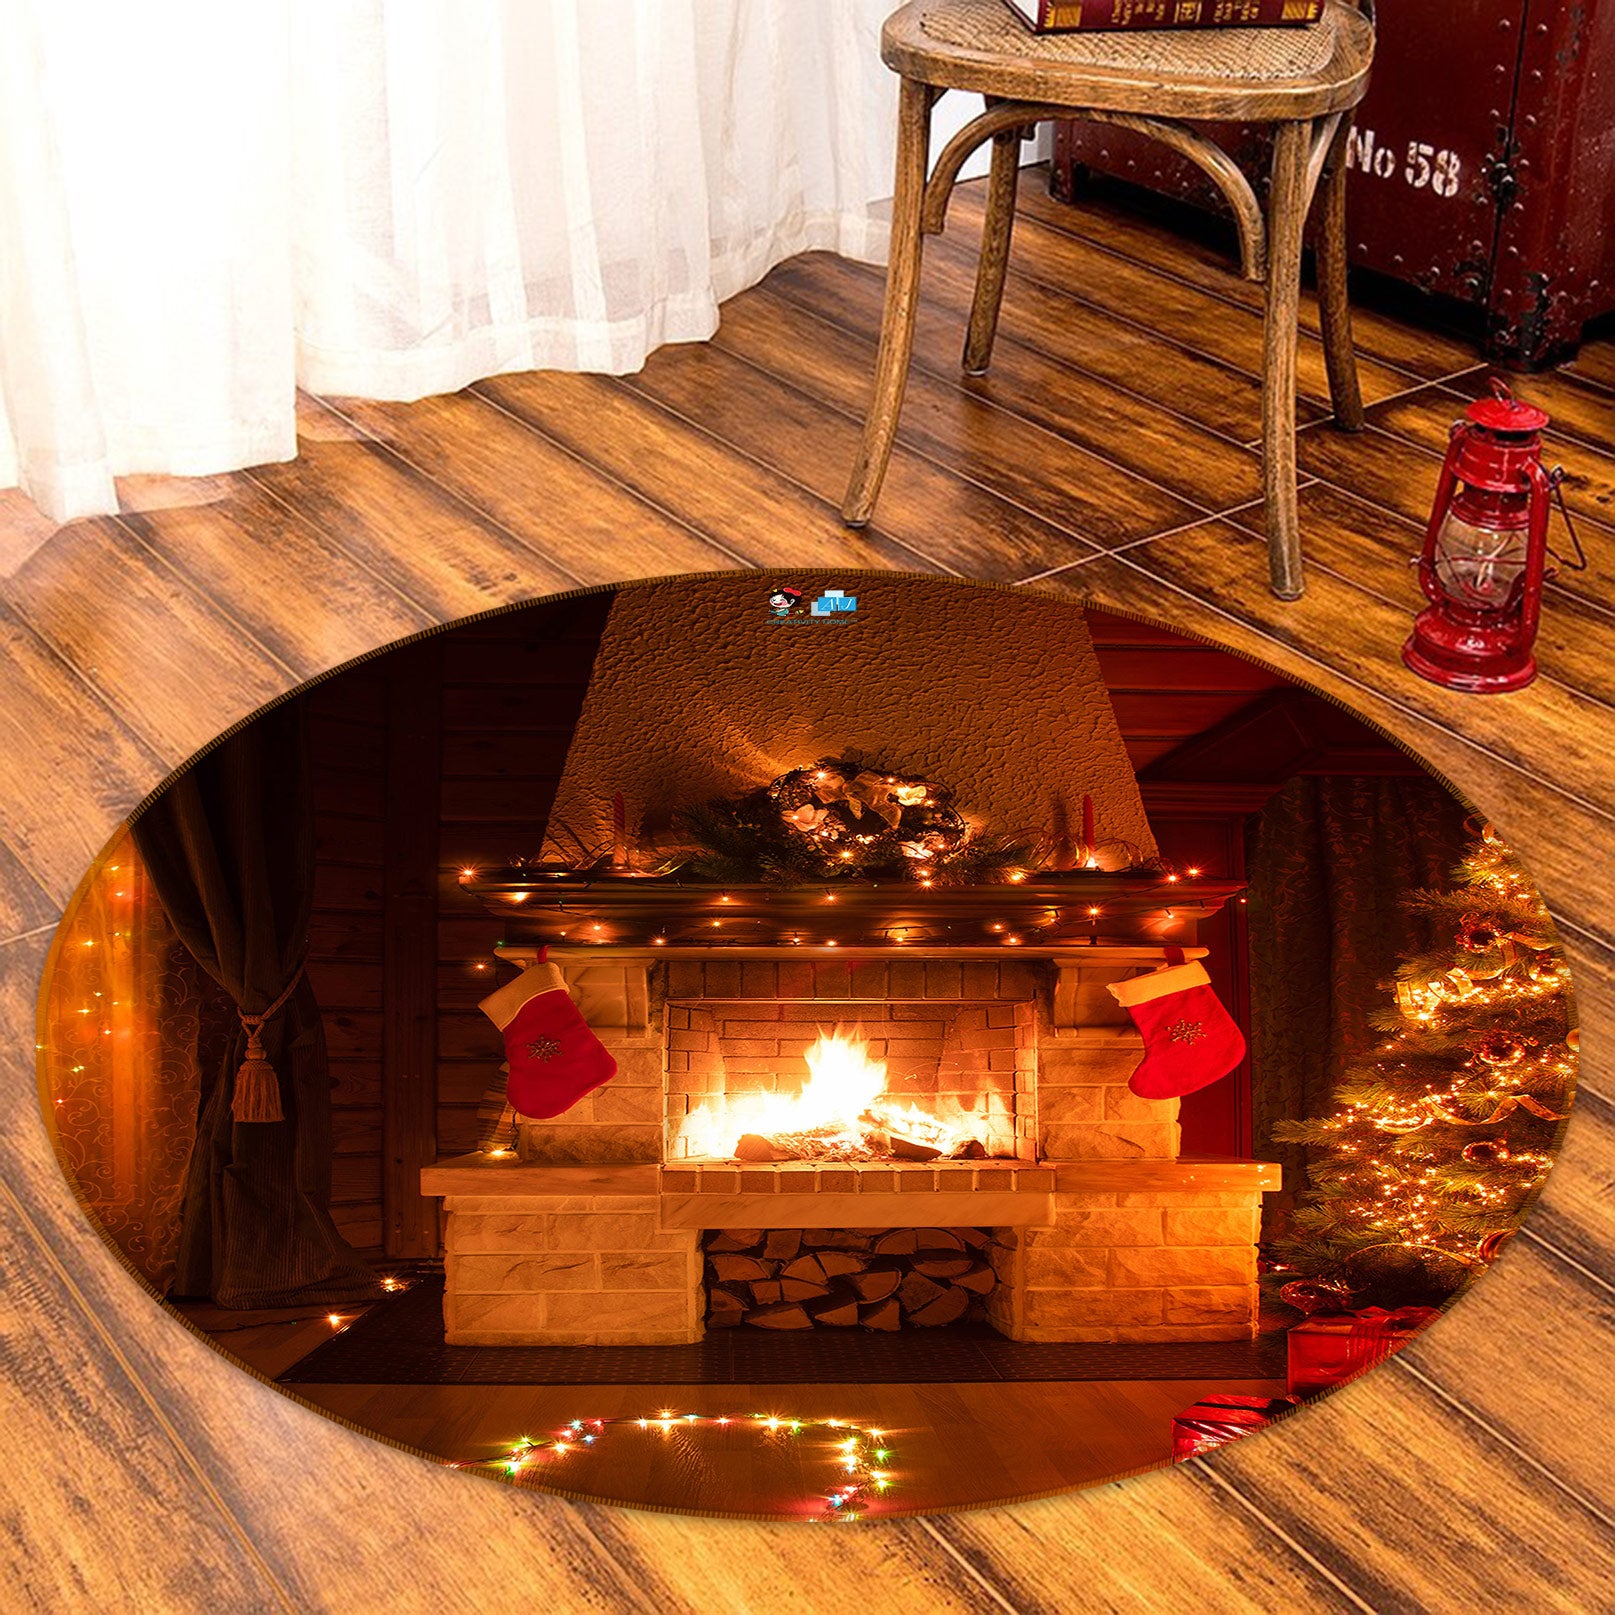 3D Fireplace 55246 Christmas Round Non Slip Rug Mat Xmas